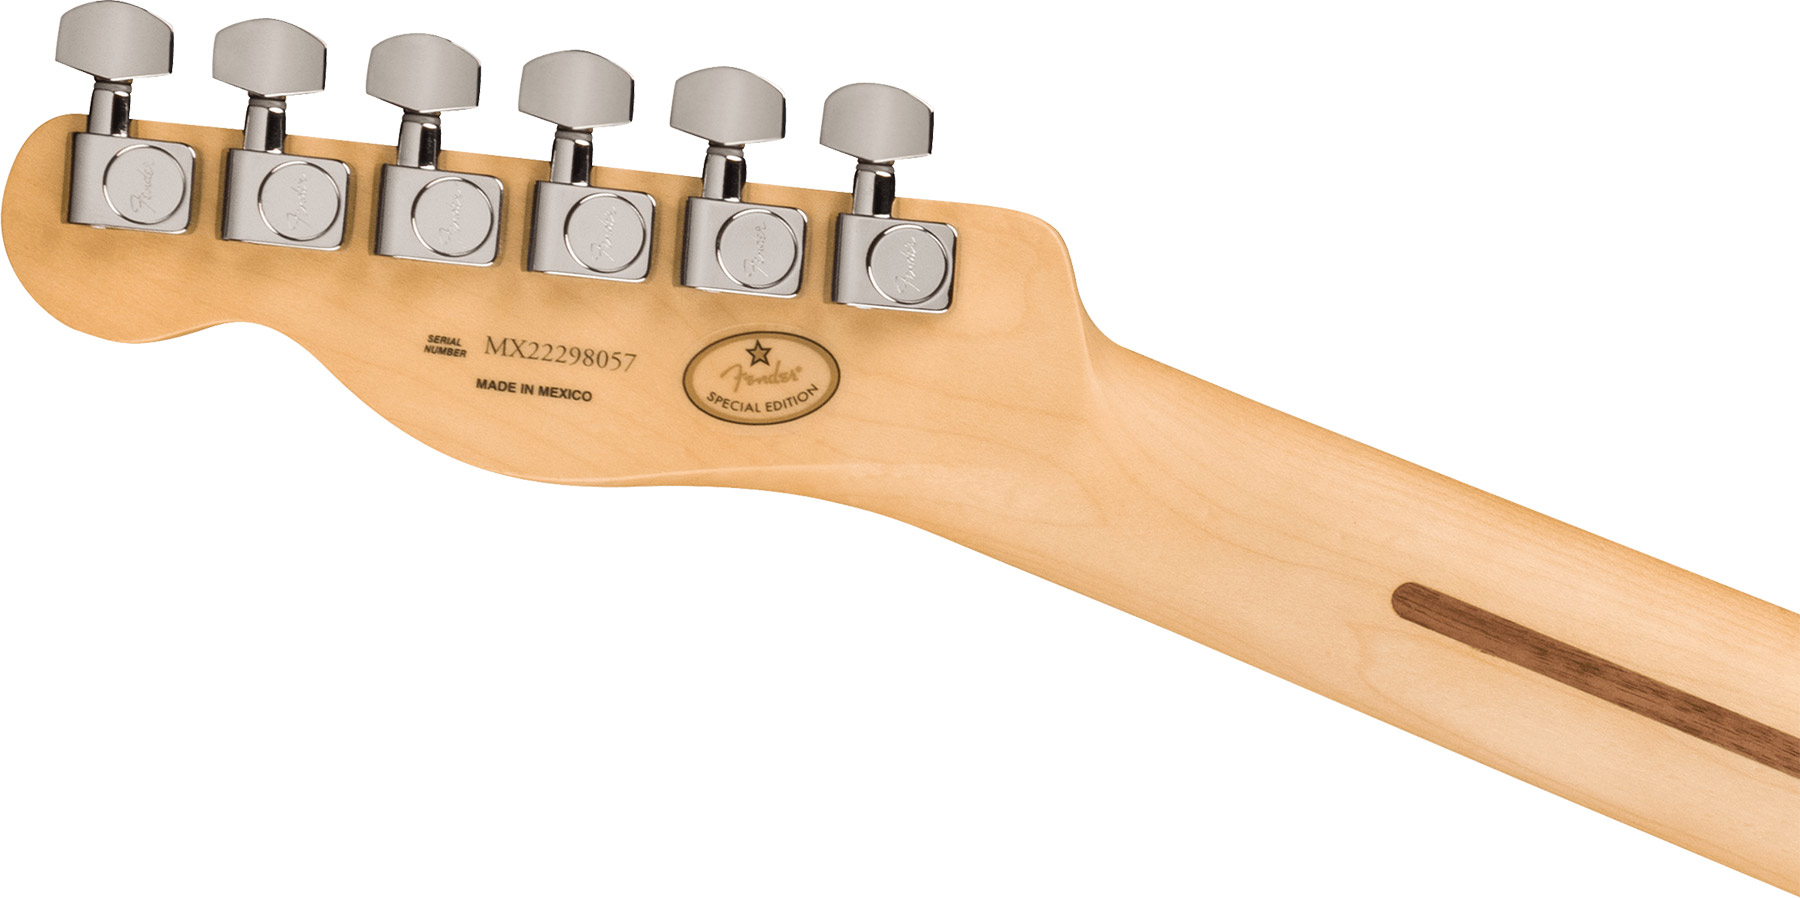 Fender Tele Player Ltd Mex 2s Seymour Duncan Mn - British Racing Green - Guitarra eléctrica con forma de tel - Variation 3